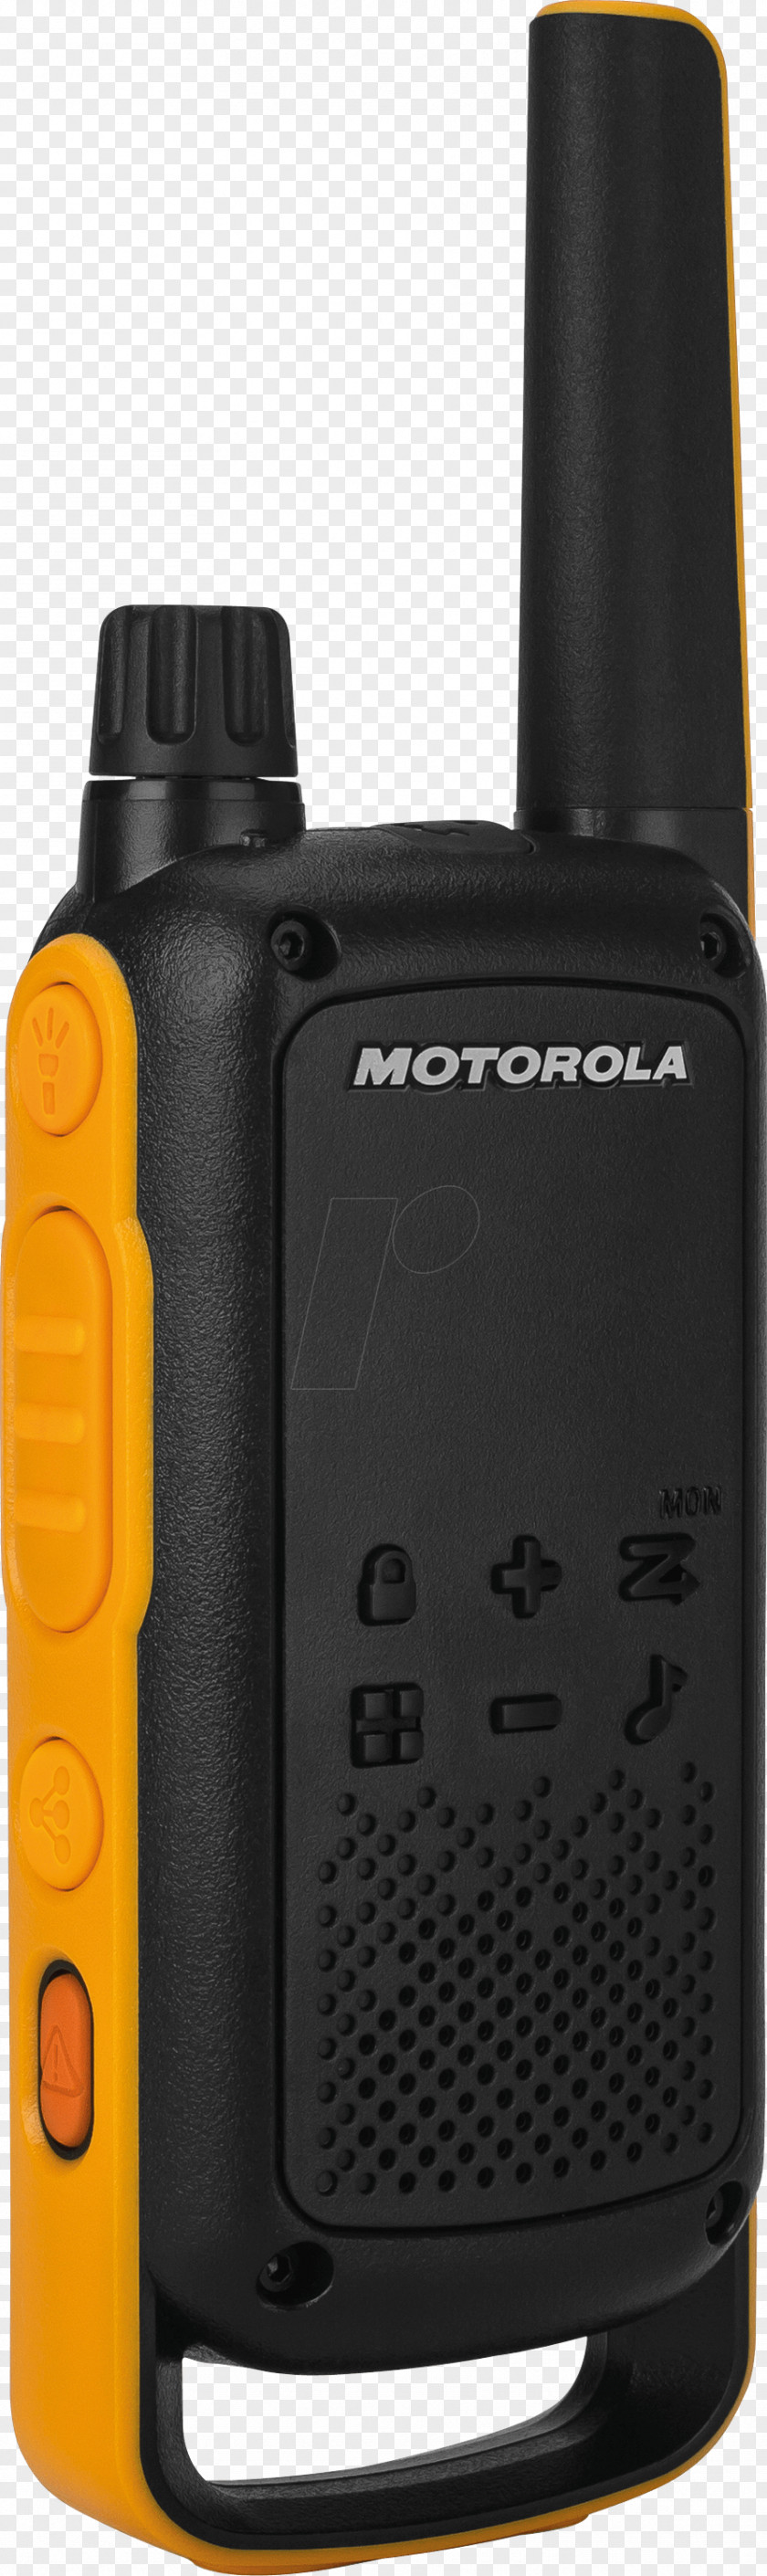 Motorola Talkabout T82 Extreme 188069 PMR446 Walkie-talkie Two-way Radio Professional Mobile PNG